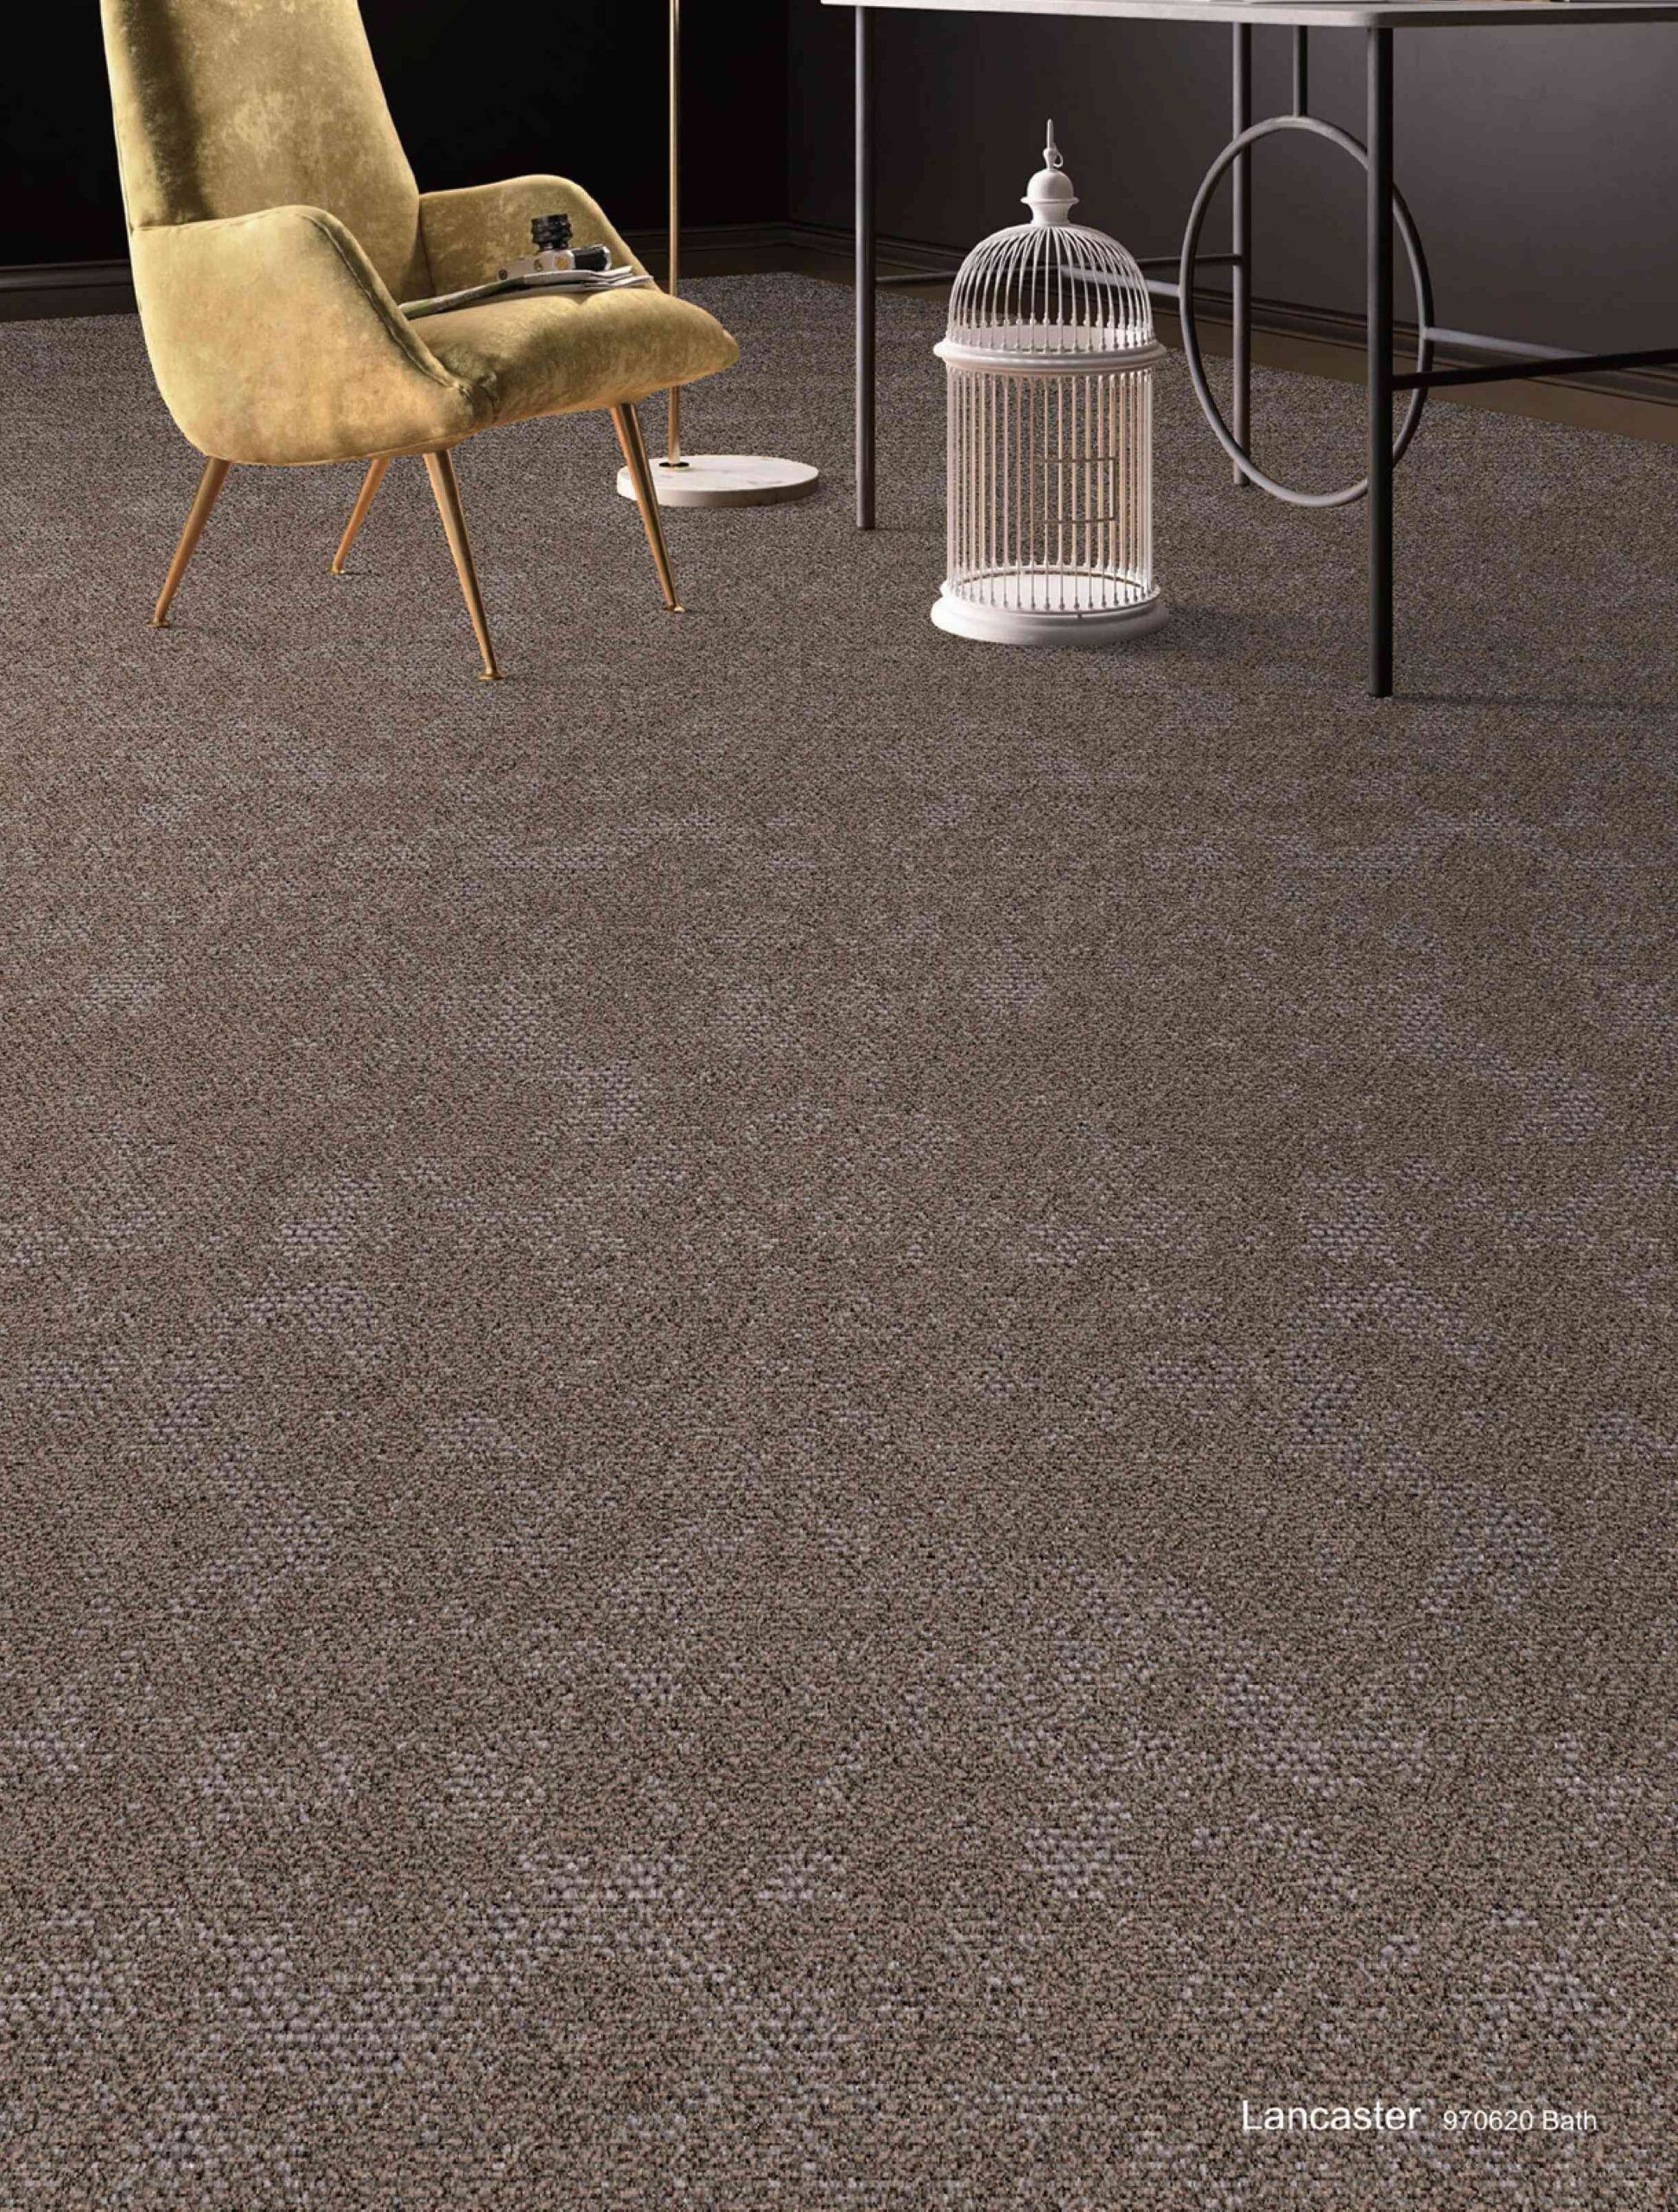 Newspec cushion backing modular carpet, Australia & China – Carpet ...